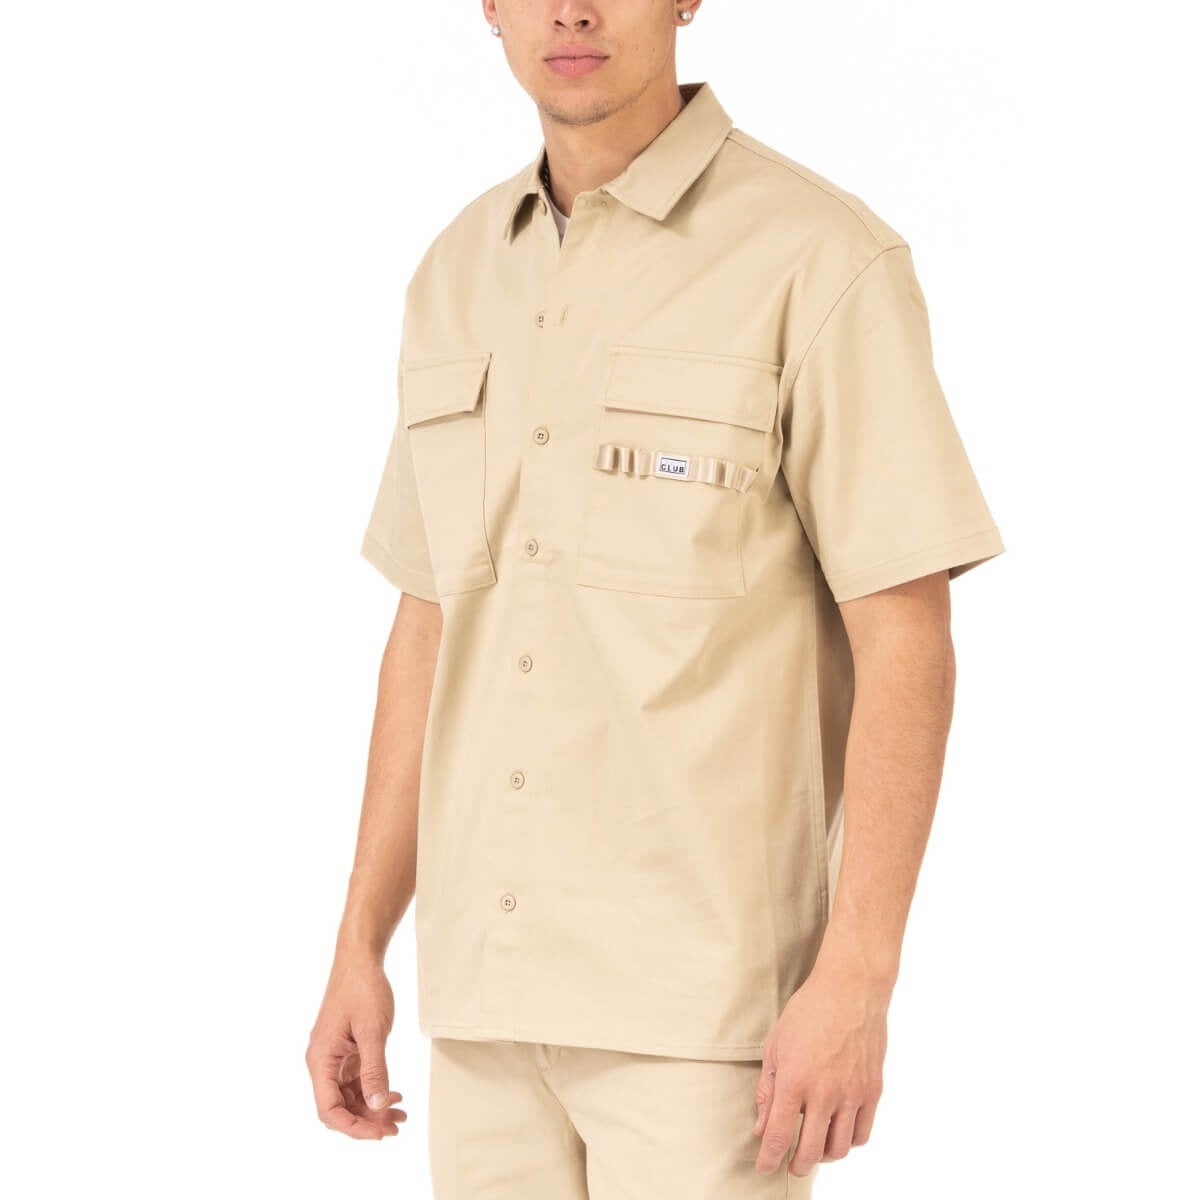 Pro Club Men's Workwear Mechanic's Short Sleeve Shirt - Khaki